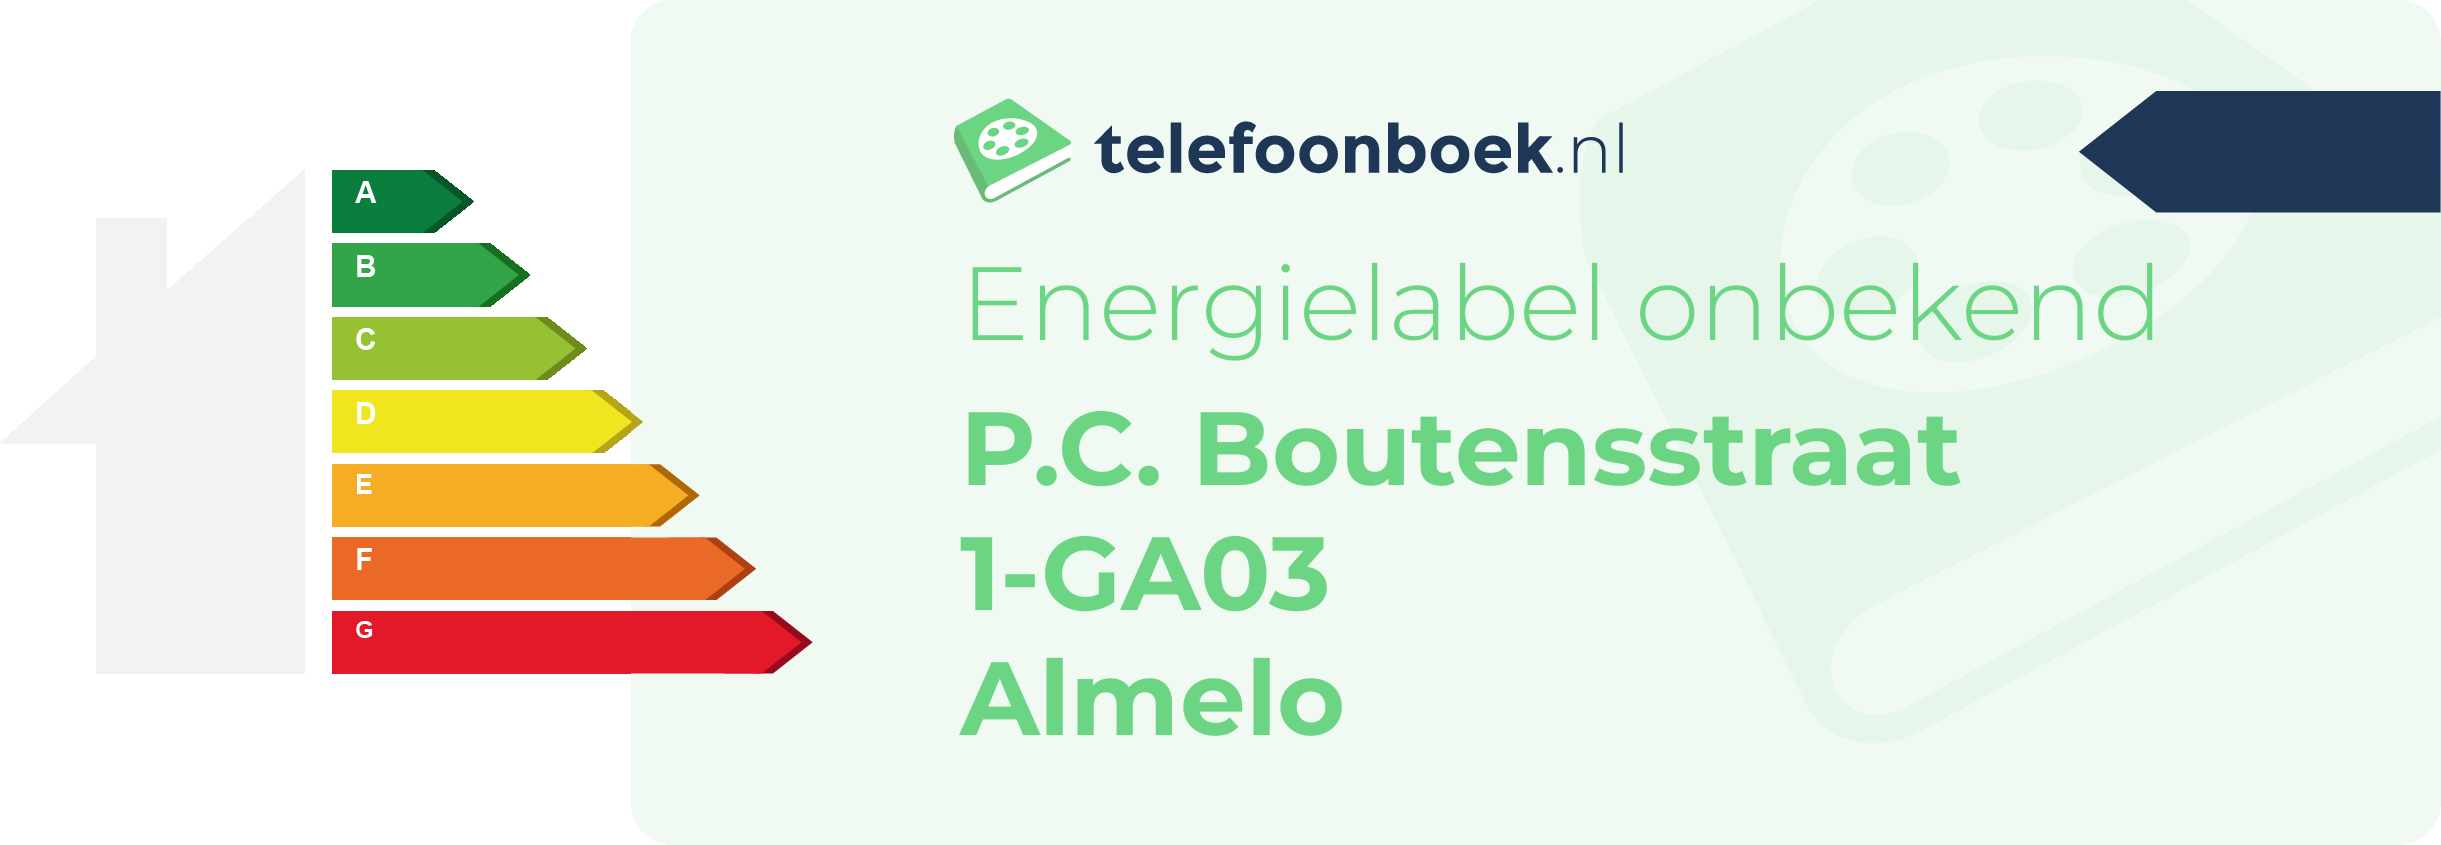 Energielabel P.C. Boutensstraat 1-GA03 Almelo